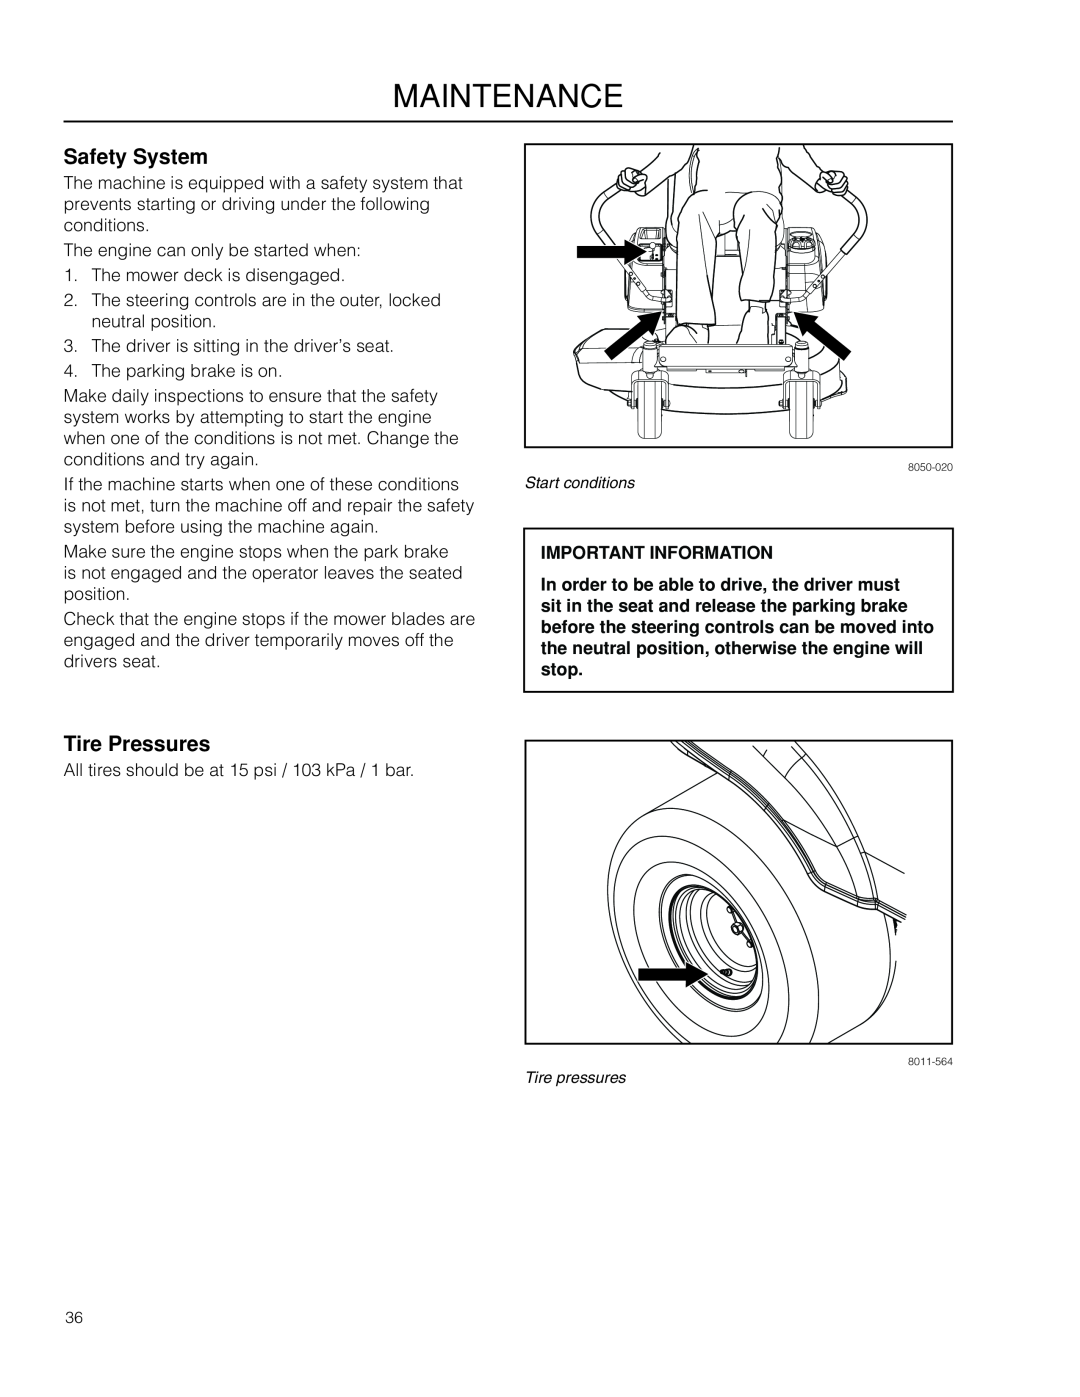 Husqvarna RZ4219BF / 966582201 manual Safety System, Tire Pressures, Maintenance, Important Information 